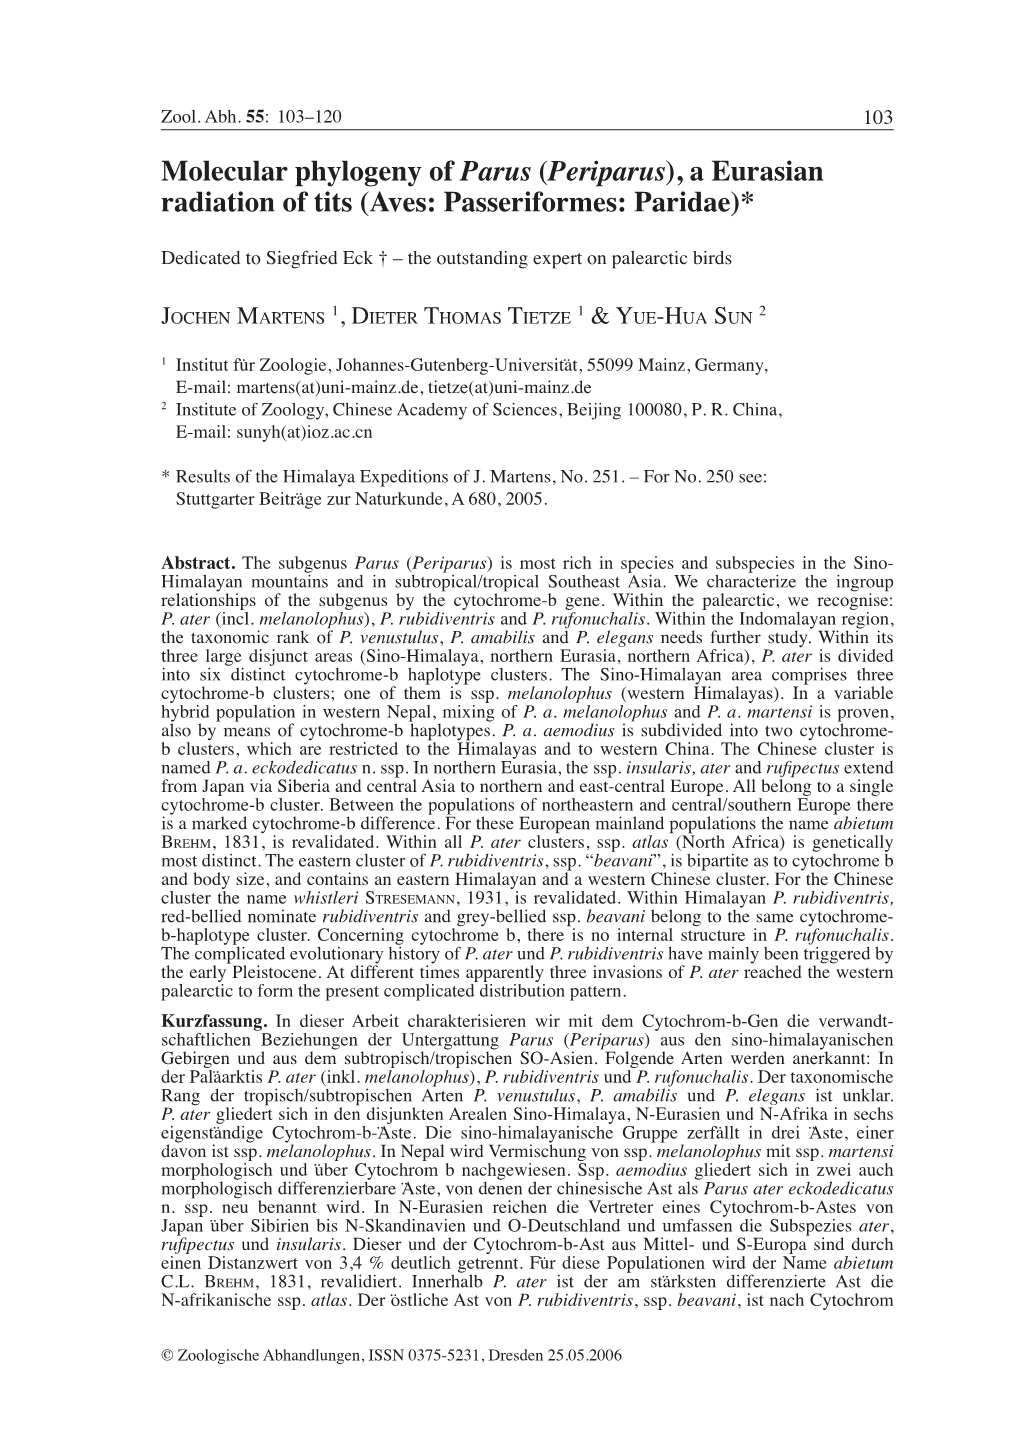 Molecular Phylogeny of Parus (Periparus), a Eurasian Radiation of Tits (Aves: Passeriformes: Paridae)*